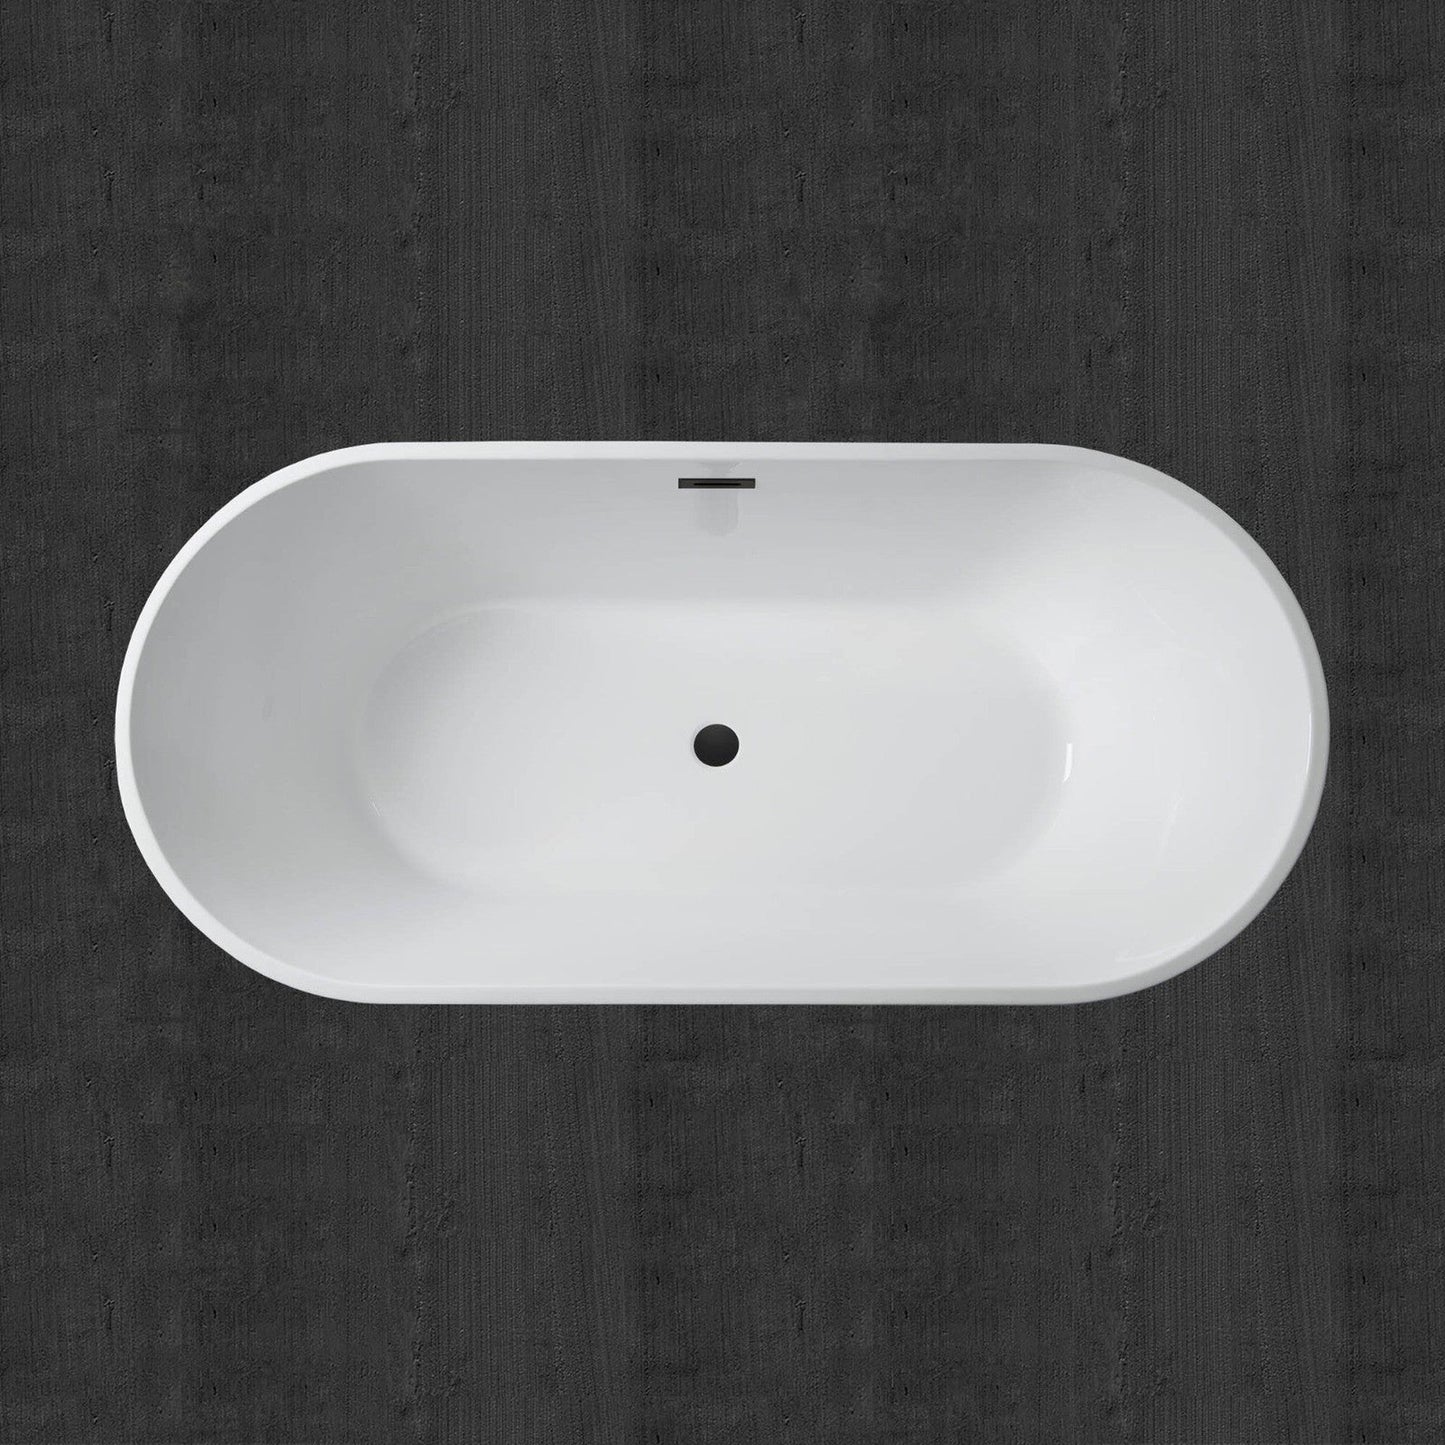 WoodBridge B0014 59" White Acrylic Freestanding Soaking Bathtub With Matte Black Drain, Overflow, F-0015 Tub Filler and Caddy Tray